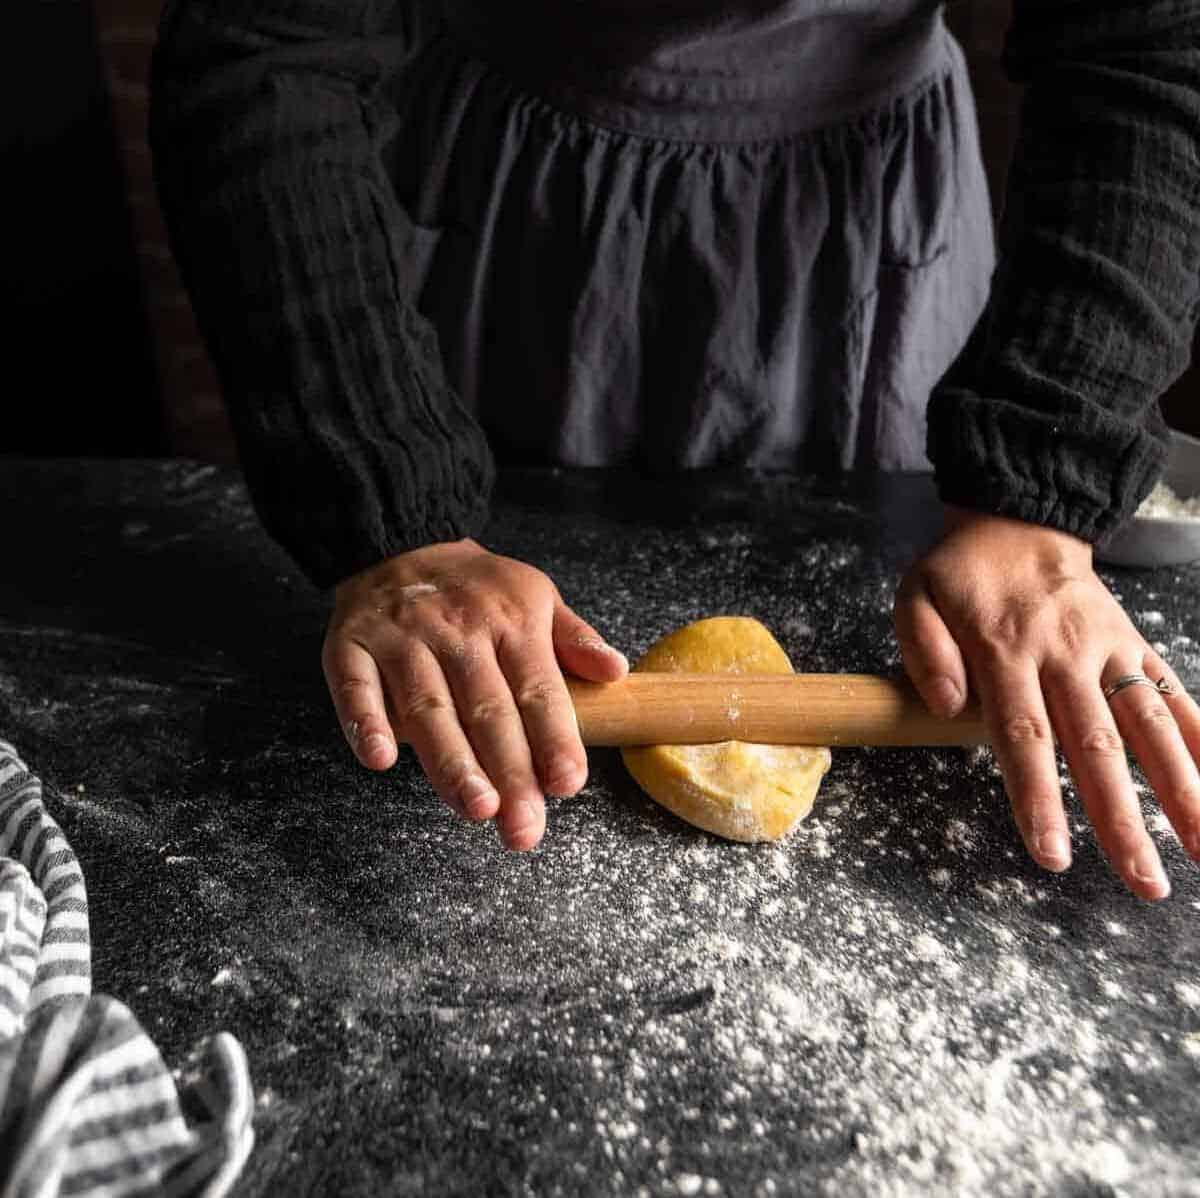 A woman rolling a small portion of semolina pasta dough.